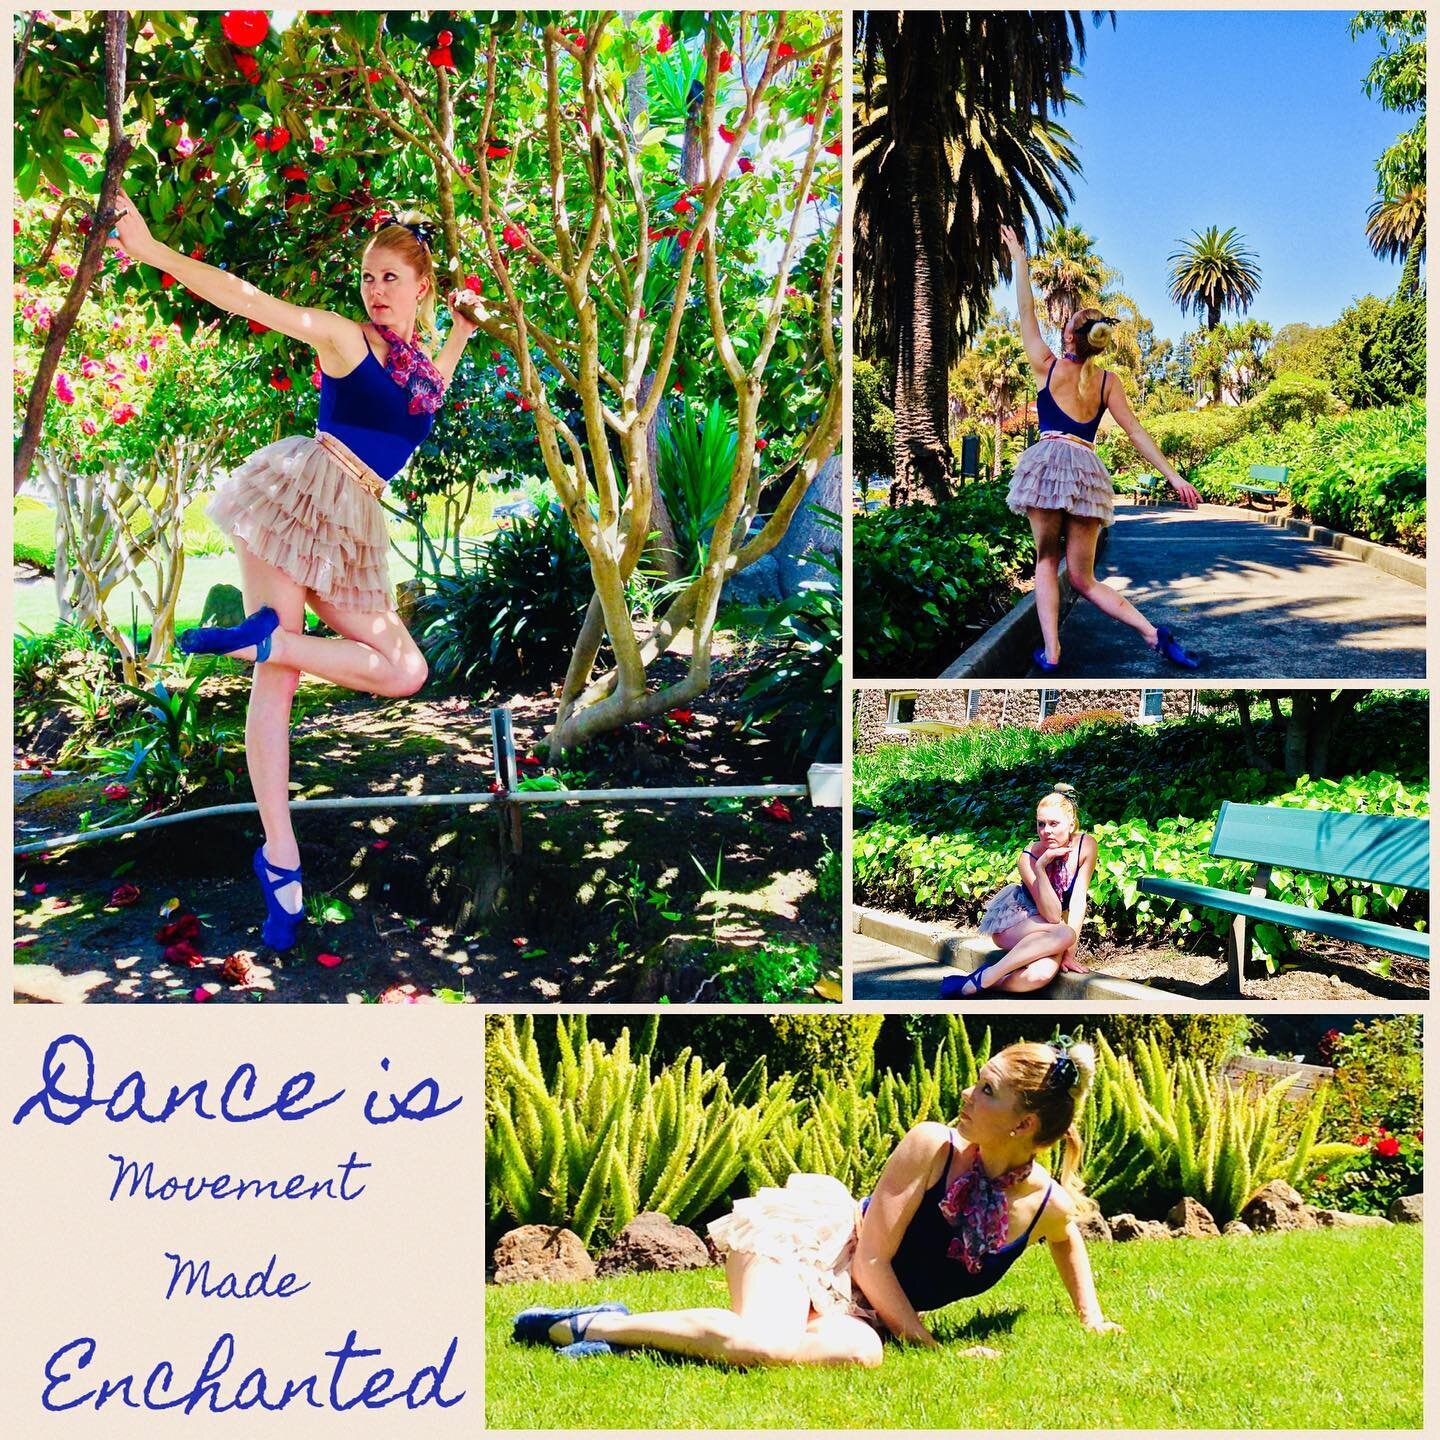 Dance is Movement Made Enchanted #rmovementwillmoveyou #edtcdance @edtcdance @companyrperformingarts EDTCdance.com